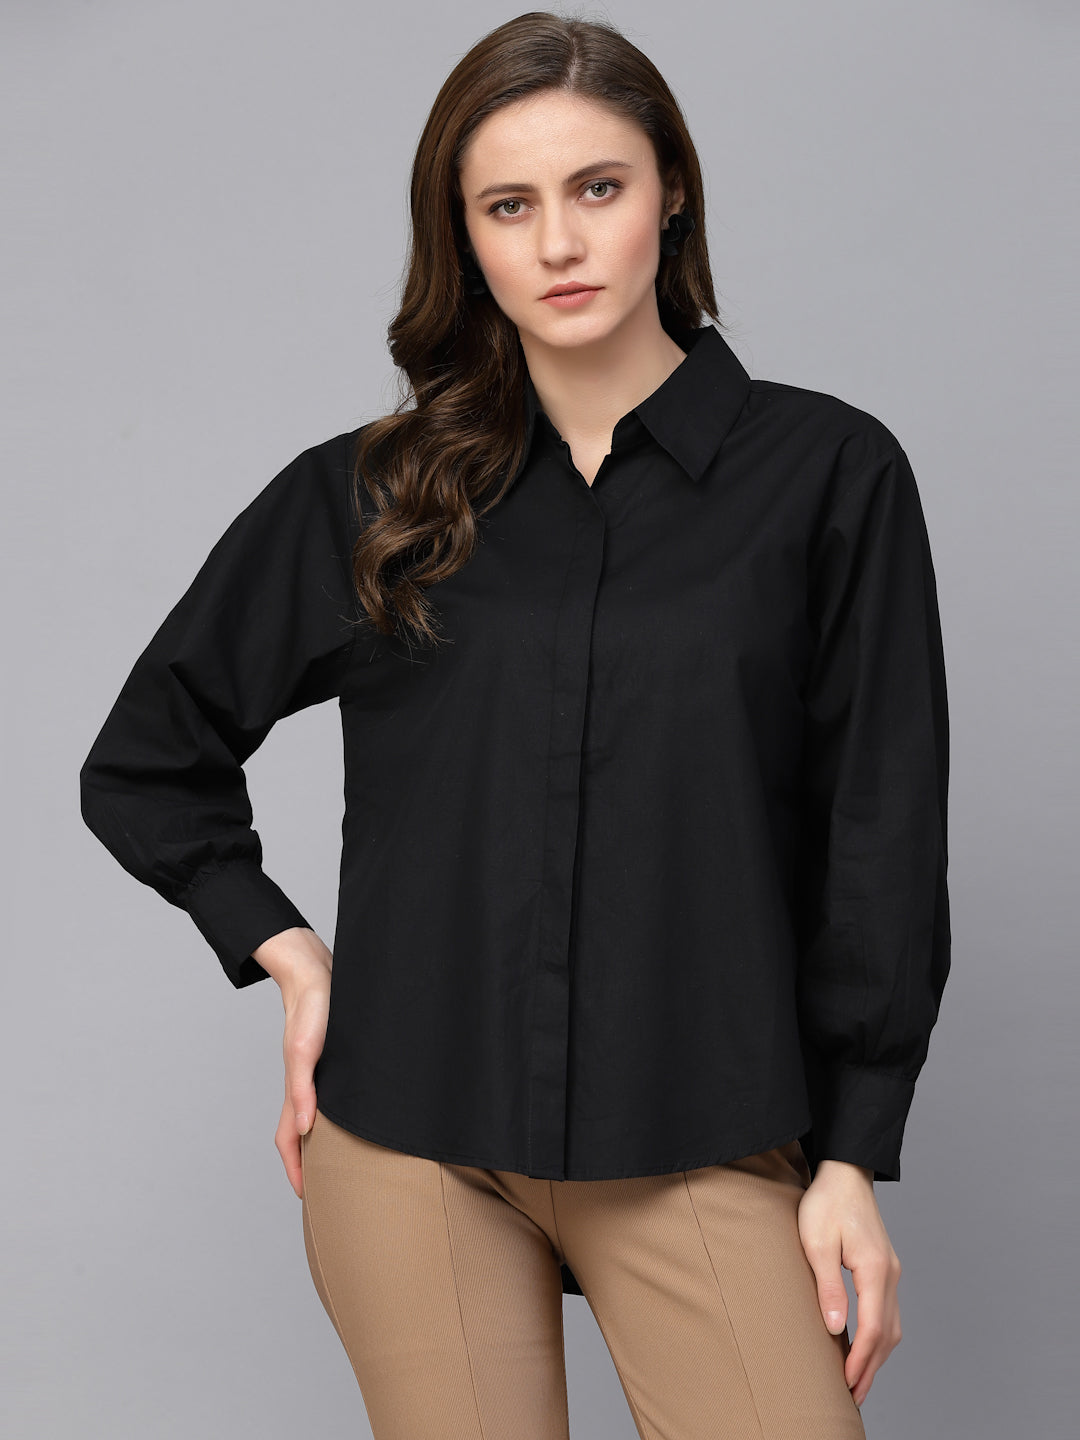 Gipsy Black Cotton  Shirt